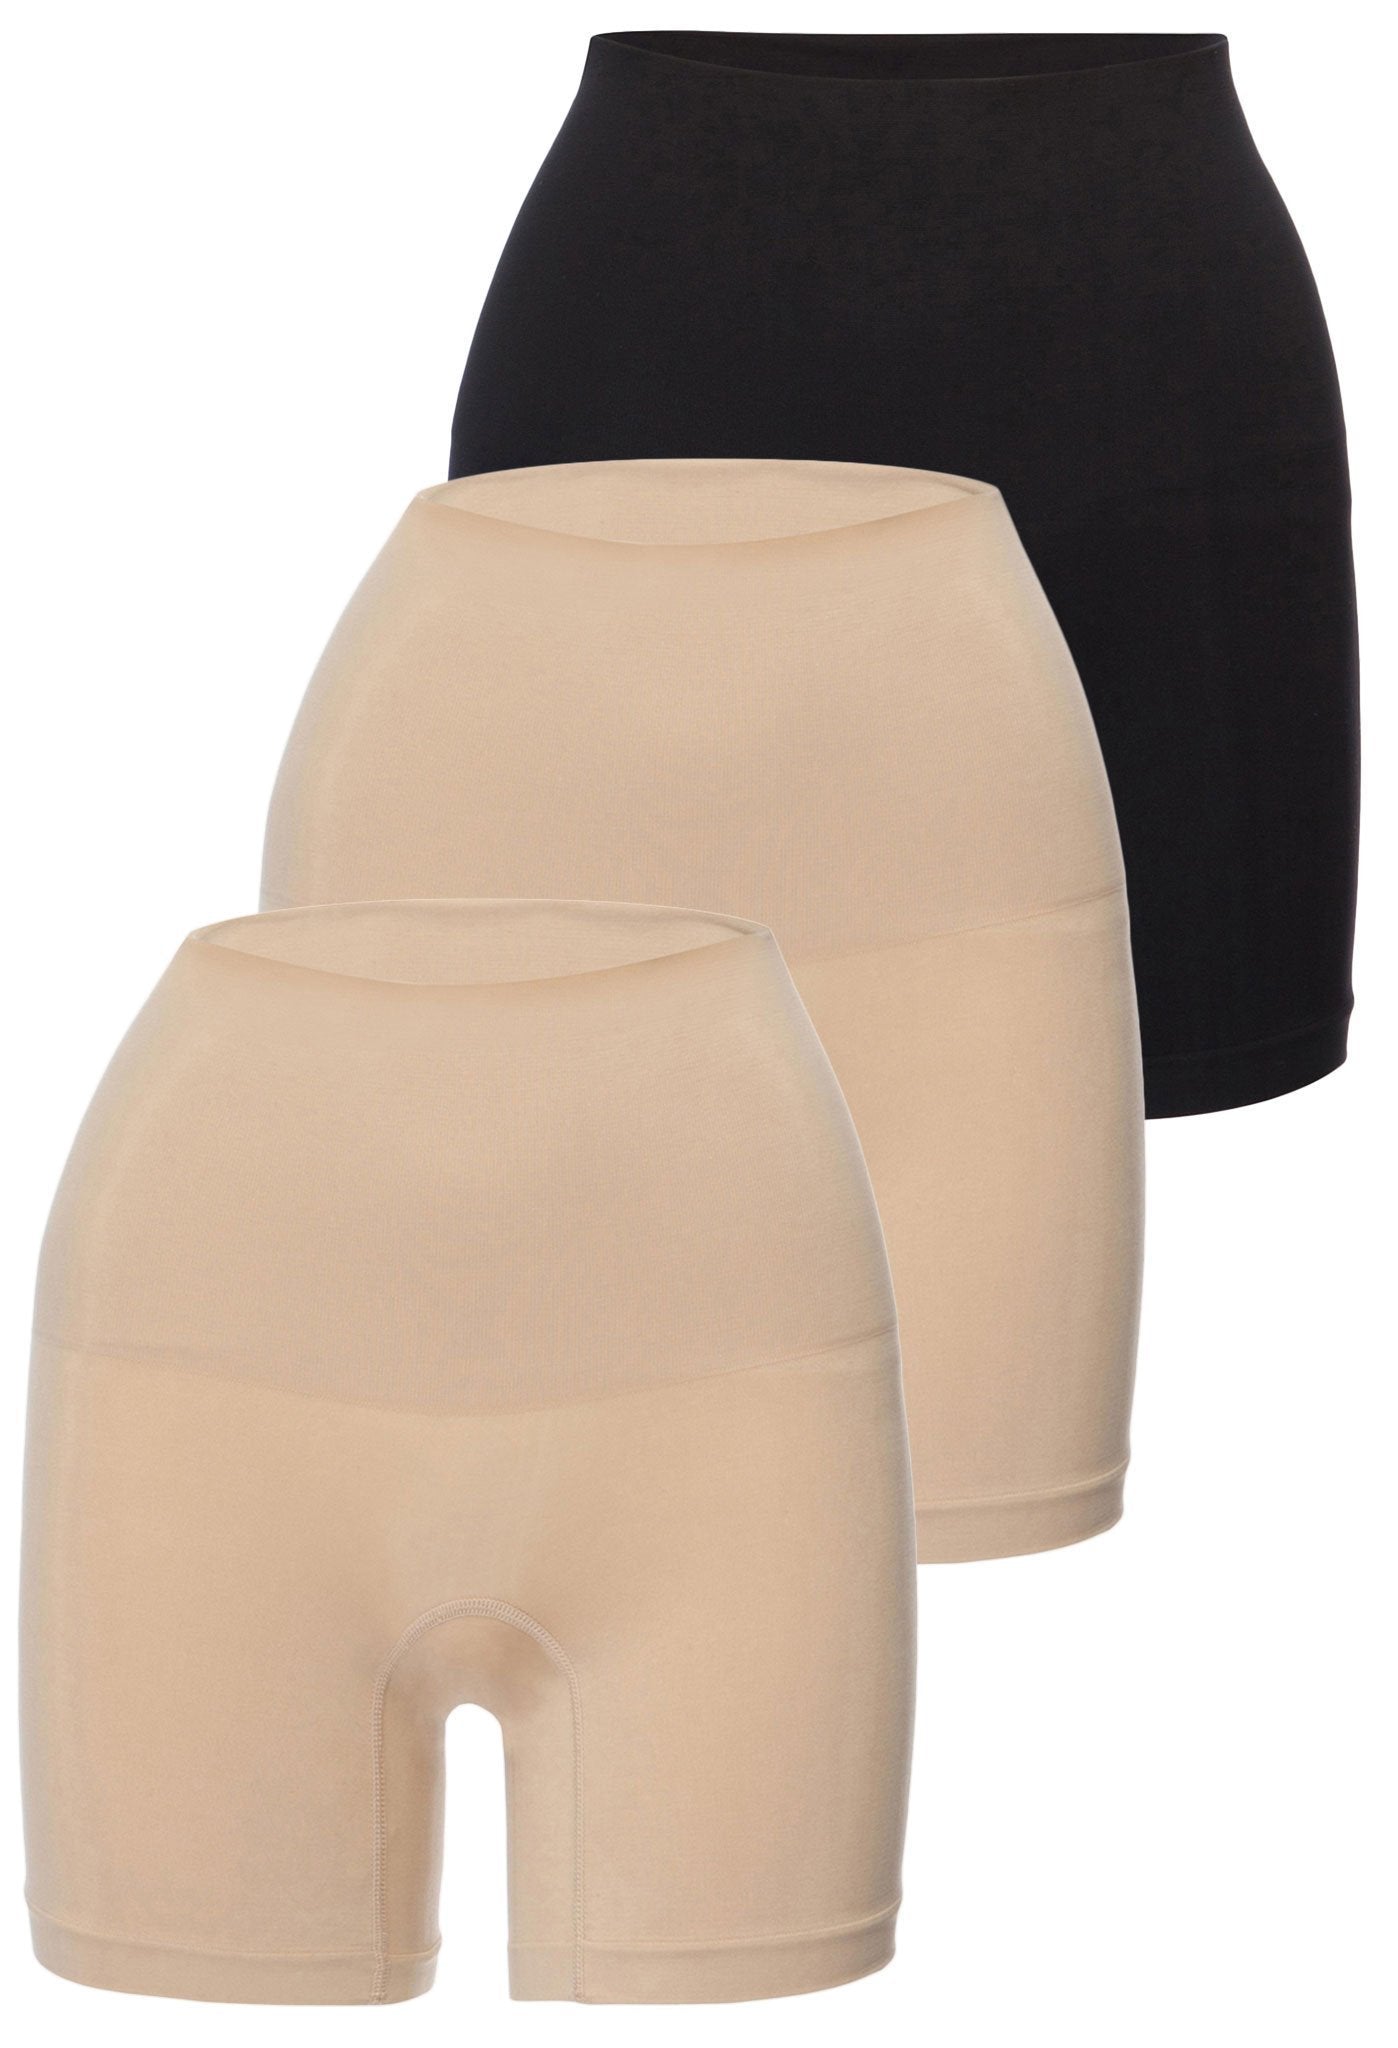 Power Shorts - Shapewear Lingerie (Nude/Black) Size 6 - 20 – B Free  Australia